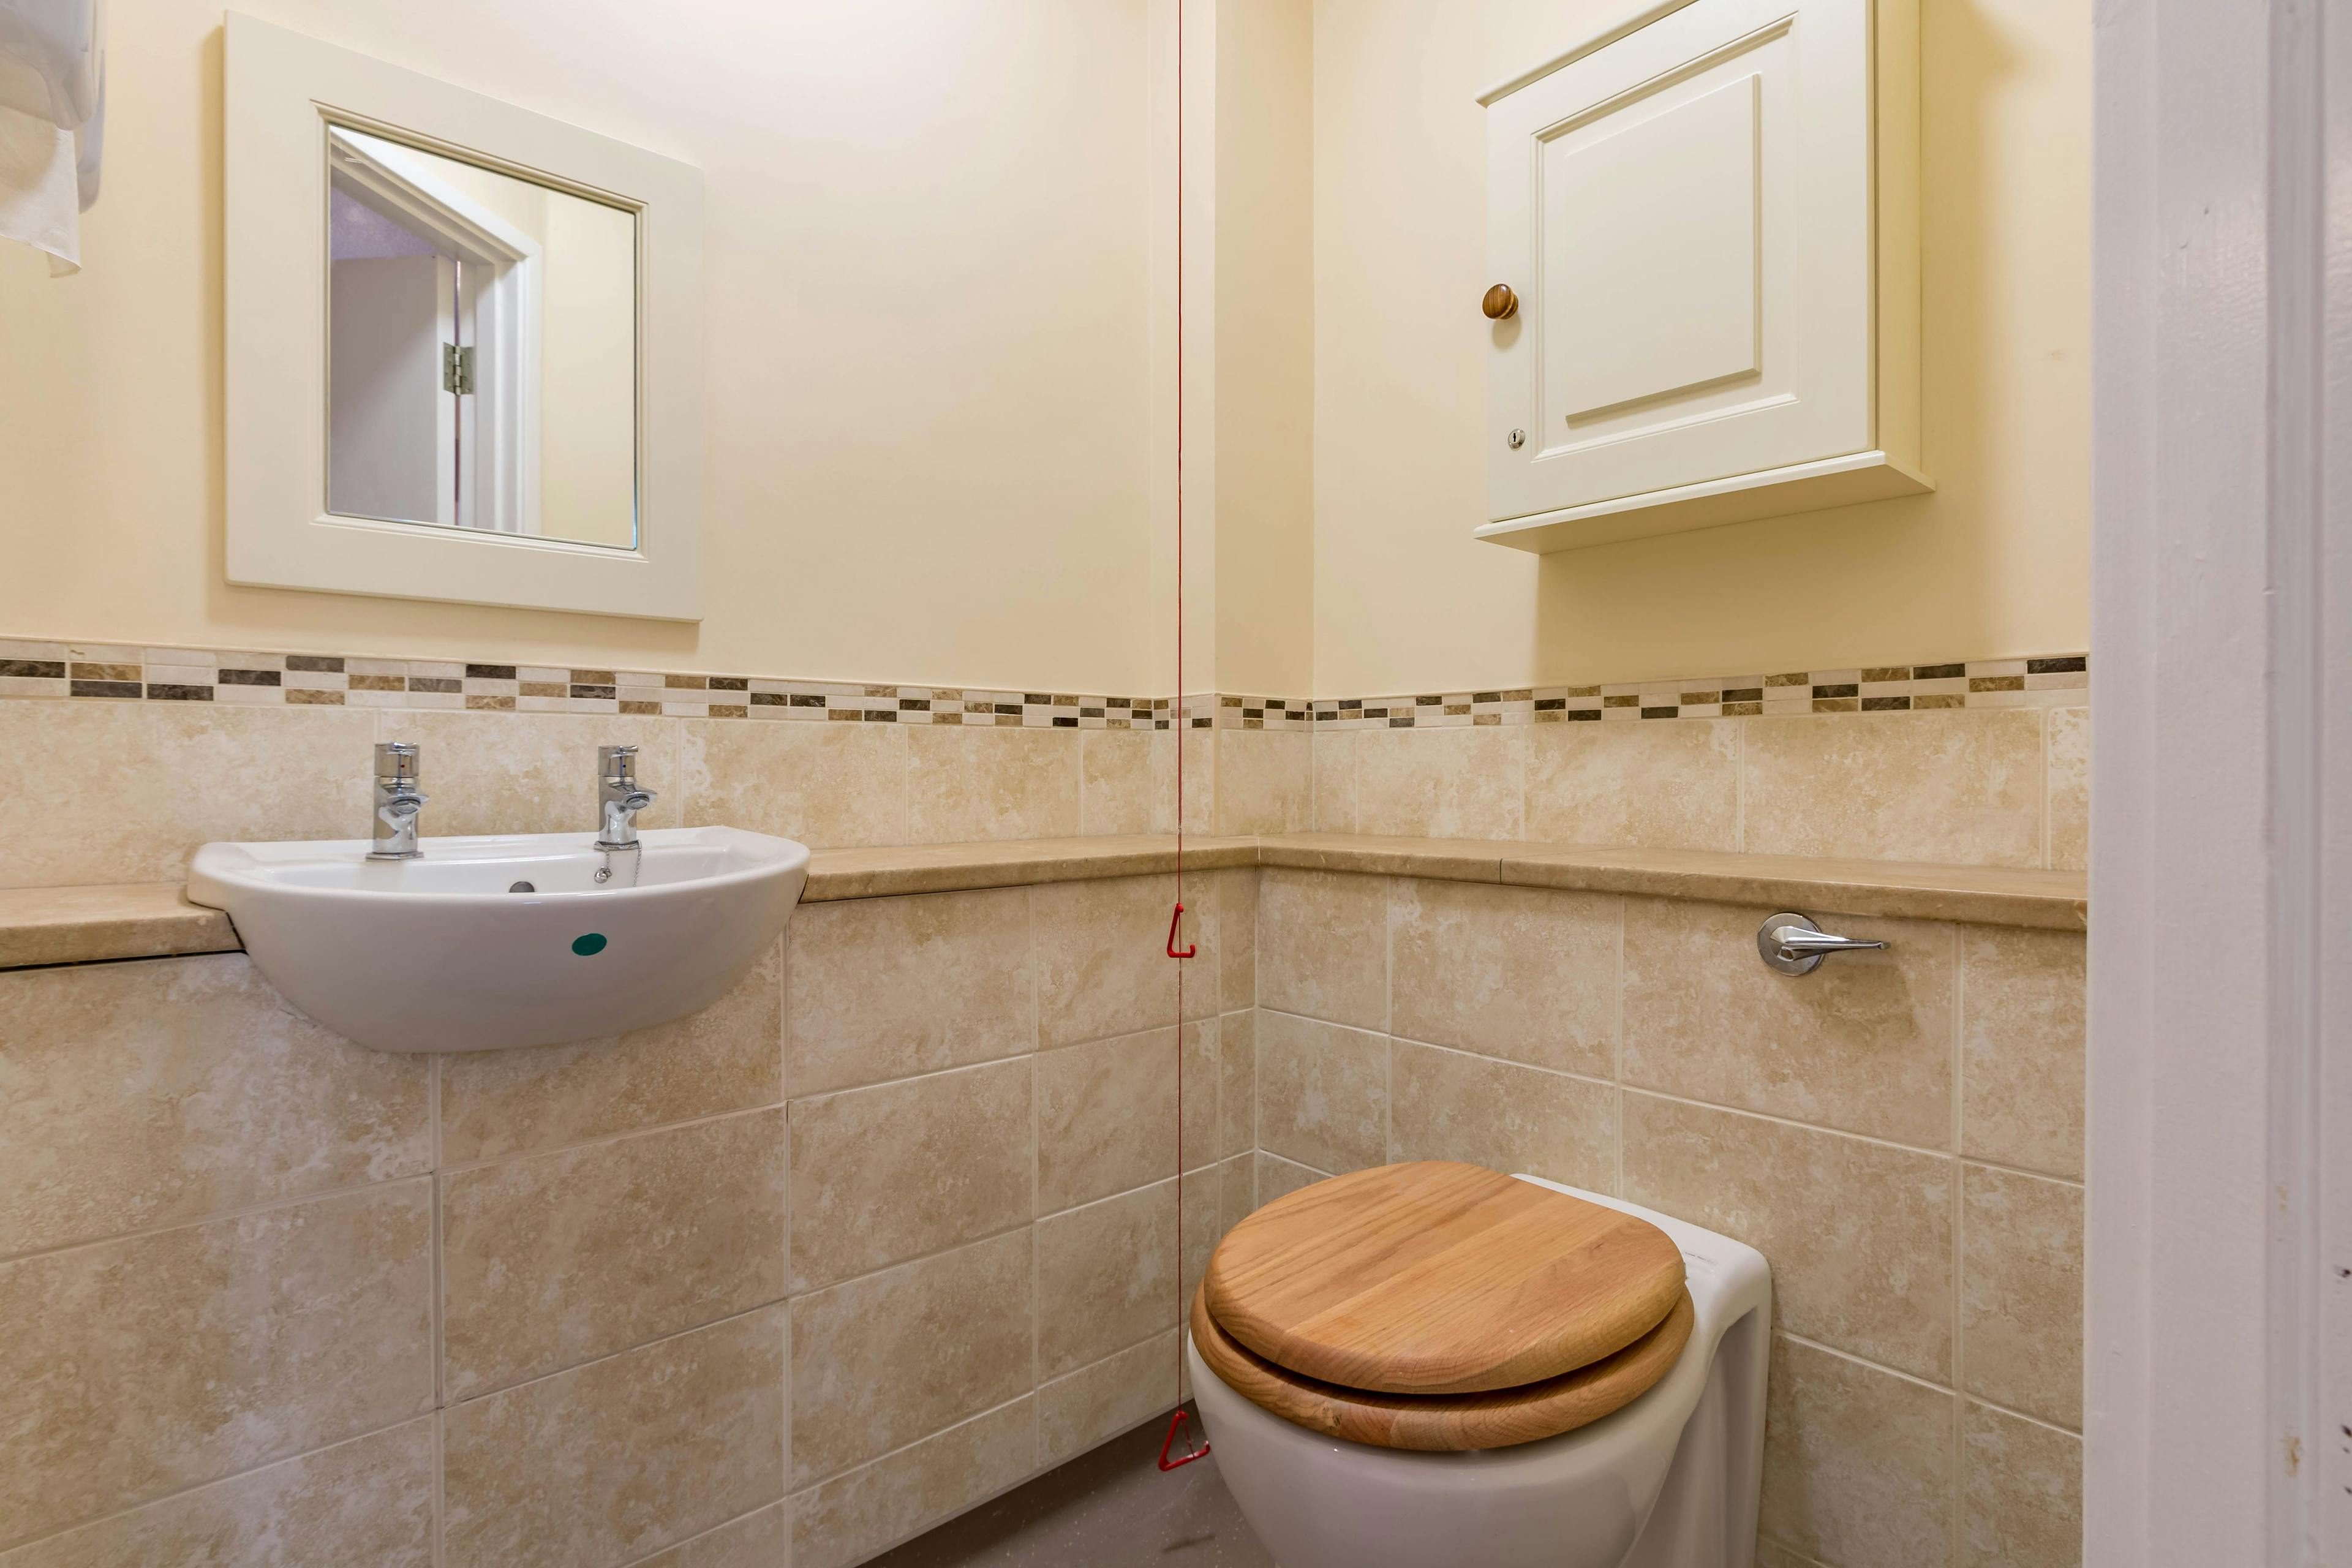 Bathroom of Hafan-Y-Coed Care Home in Llanelli, Wales